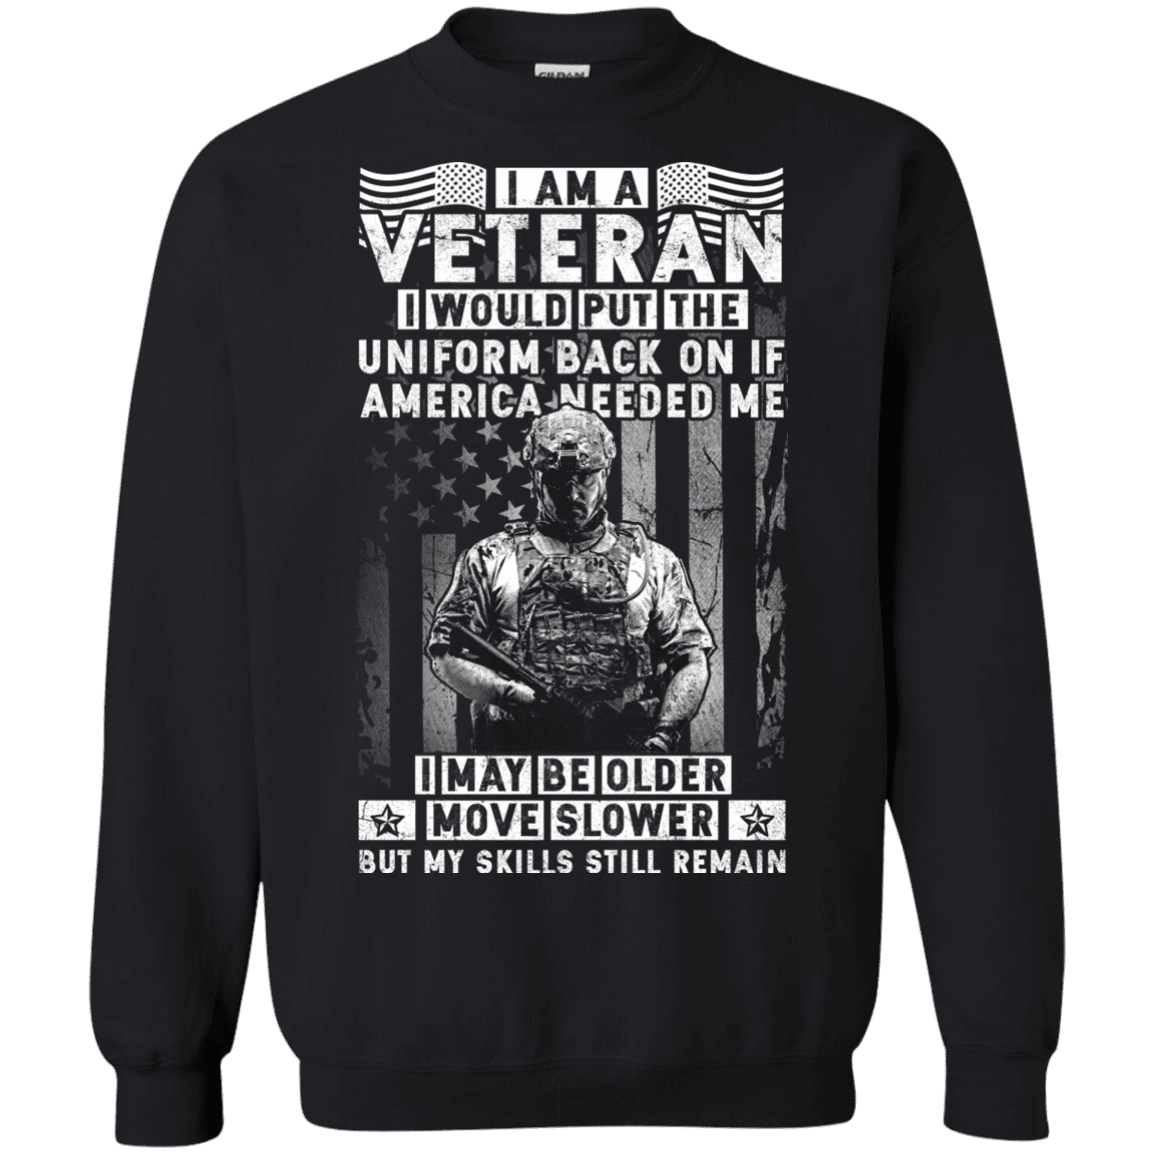 Military T-Shirt "I am a Veteran Men" Front-TShirt-General-Veterans Nation